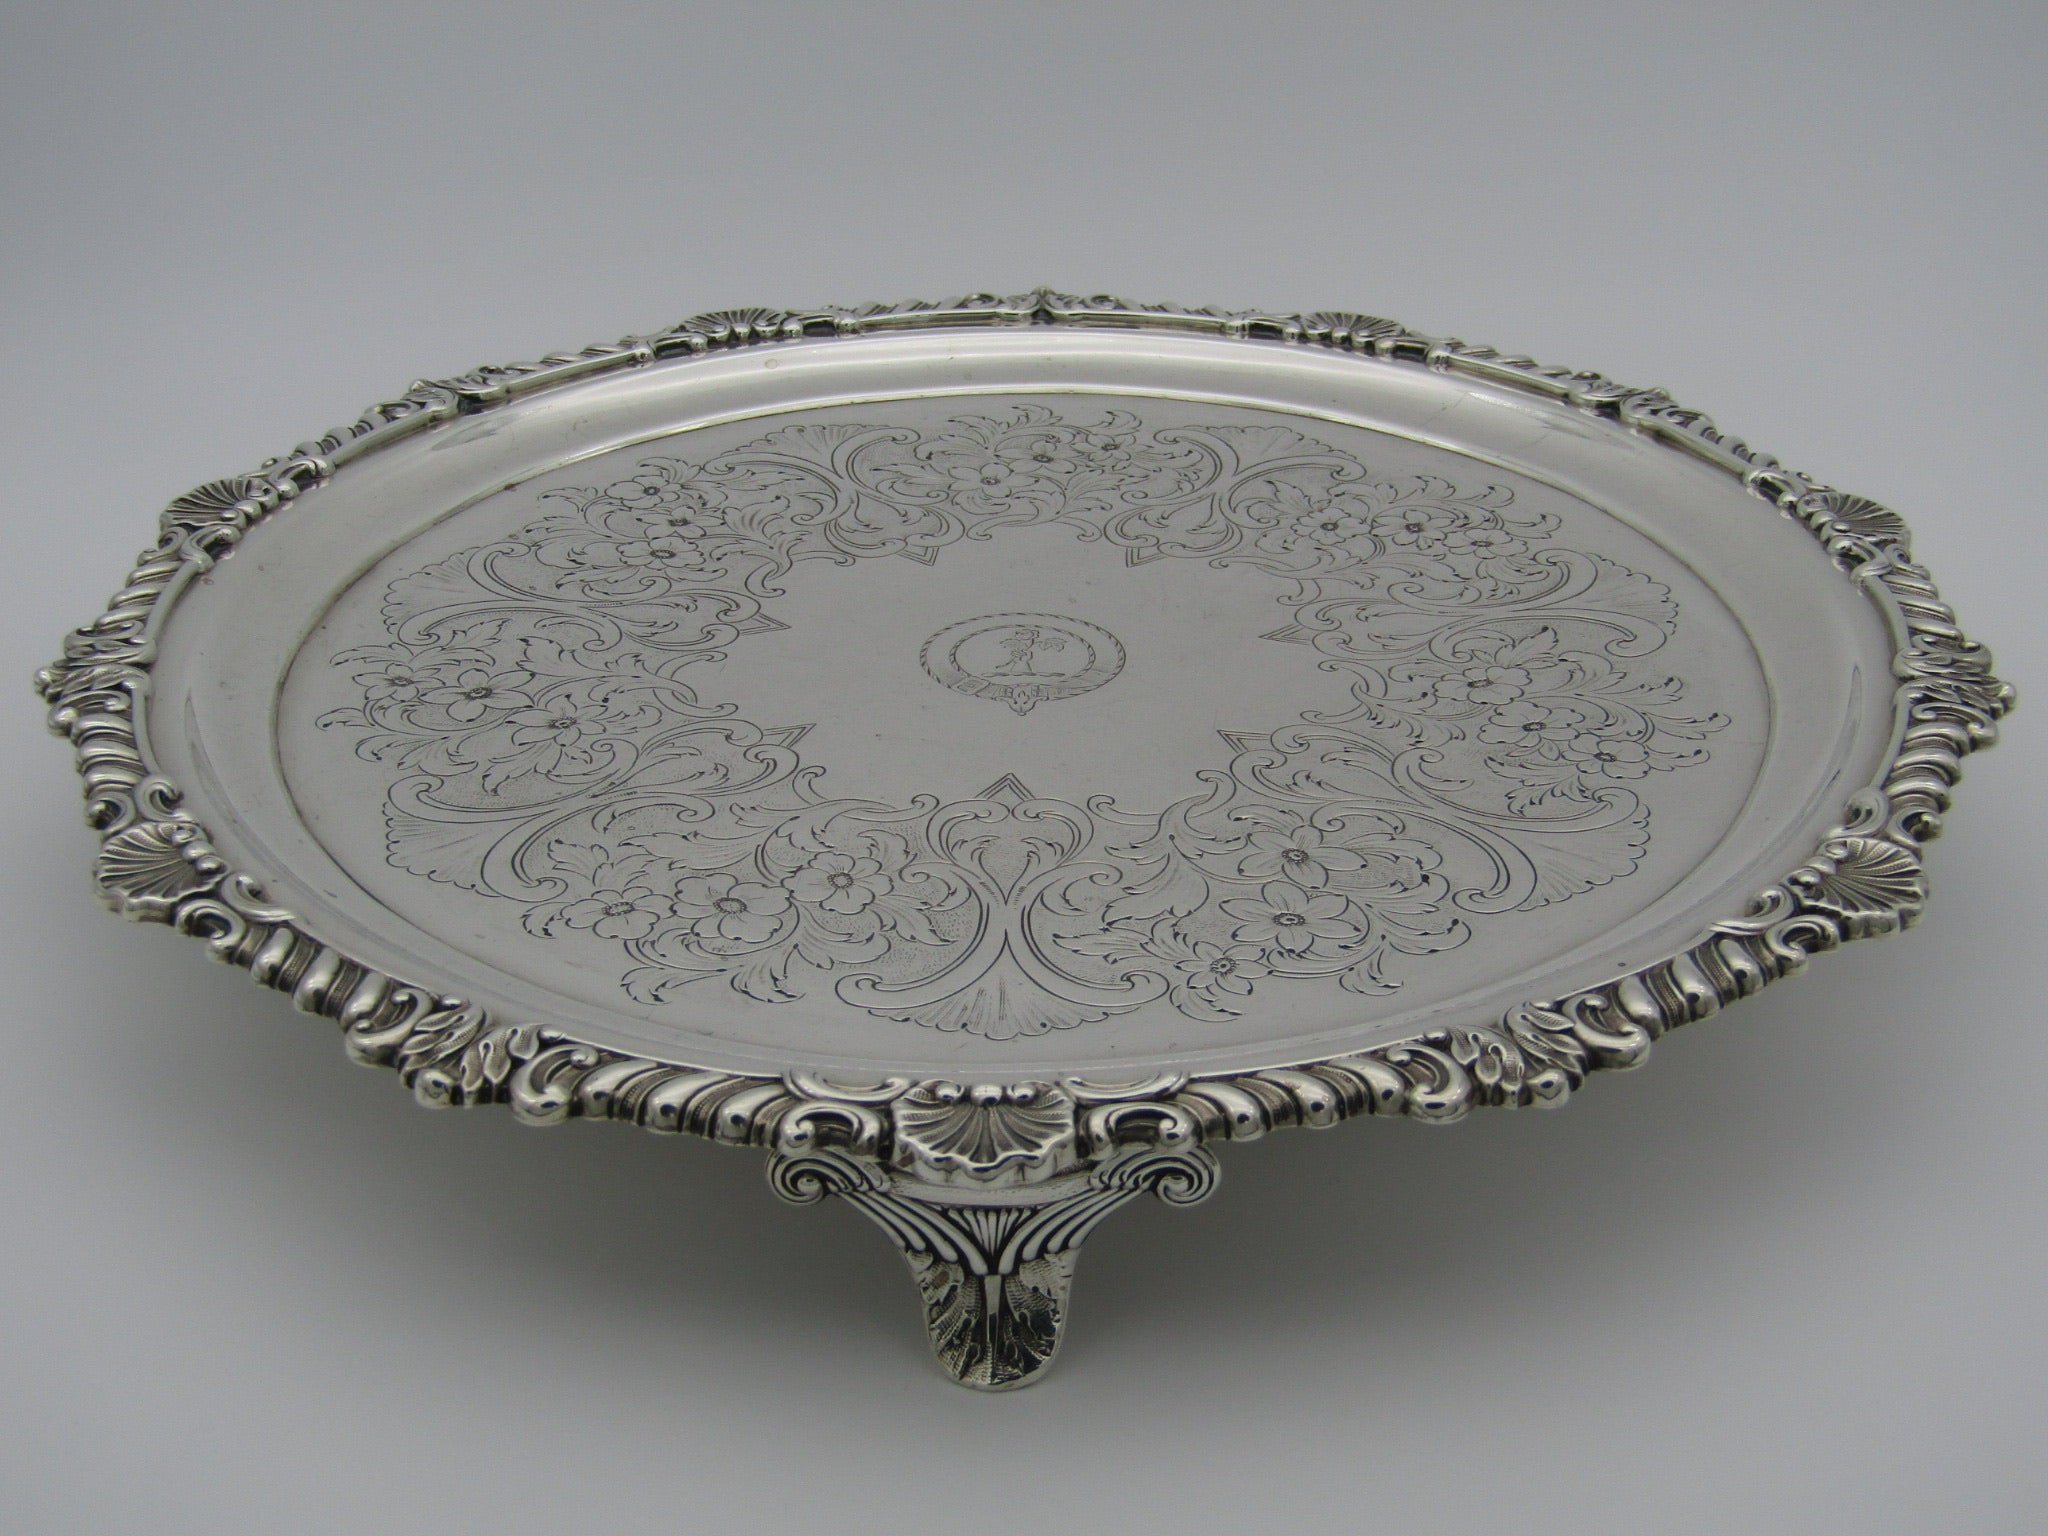 A sterling silver tray by John McKay, Edinburgh, 1811.